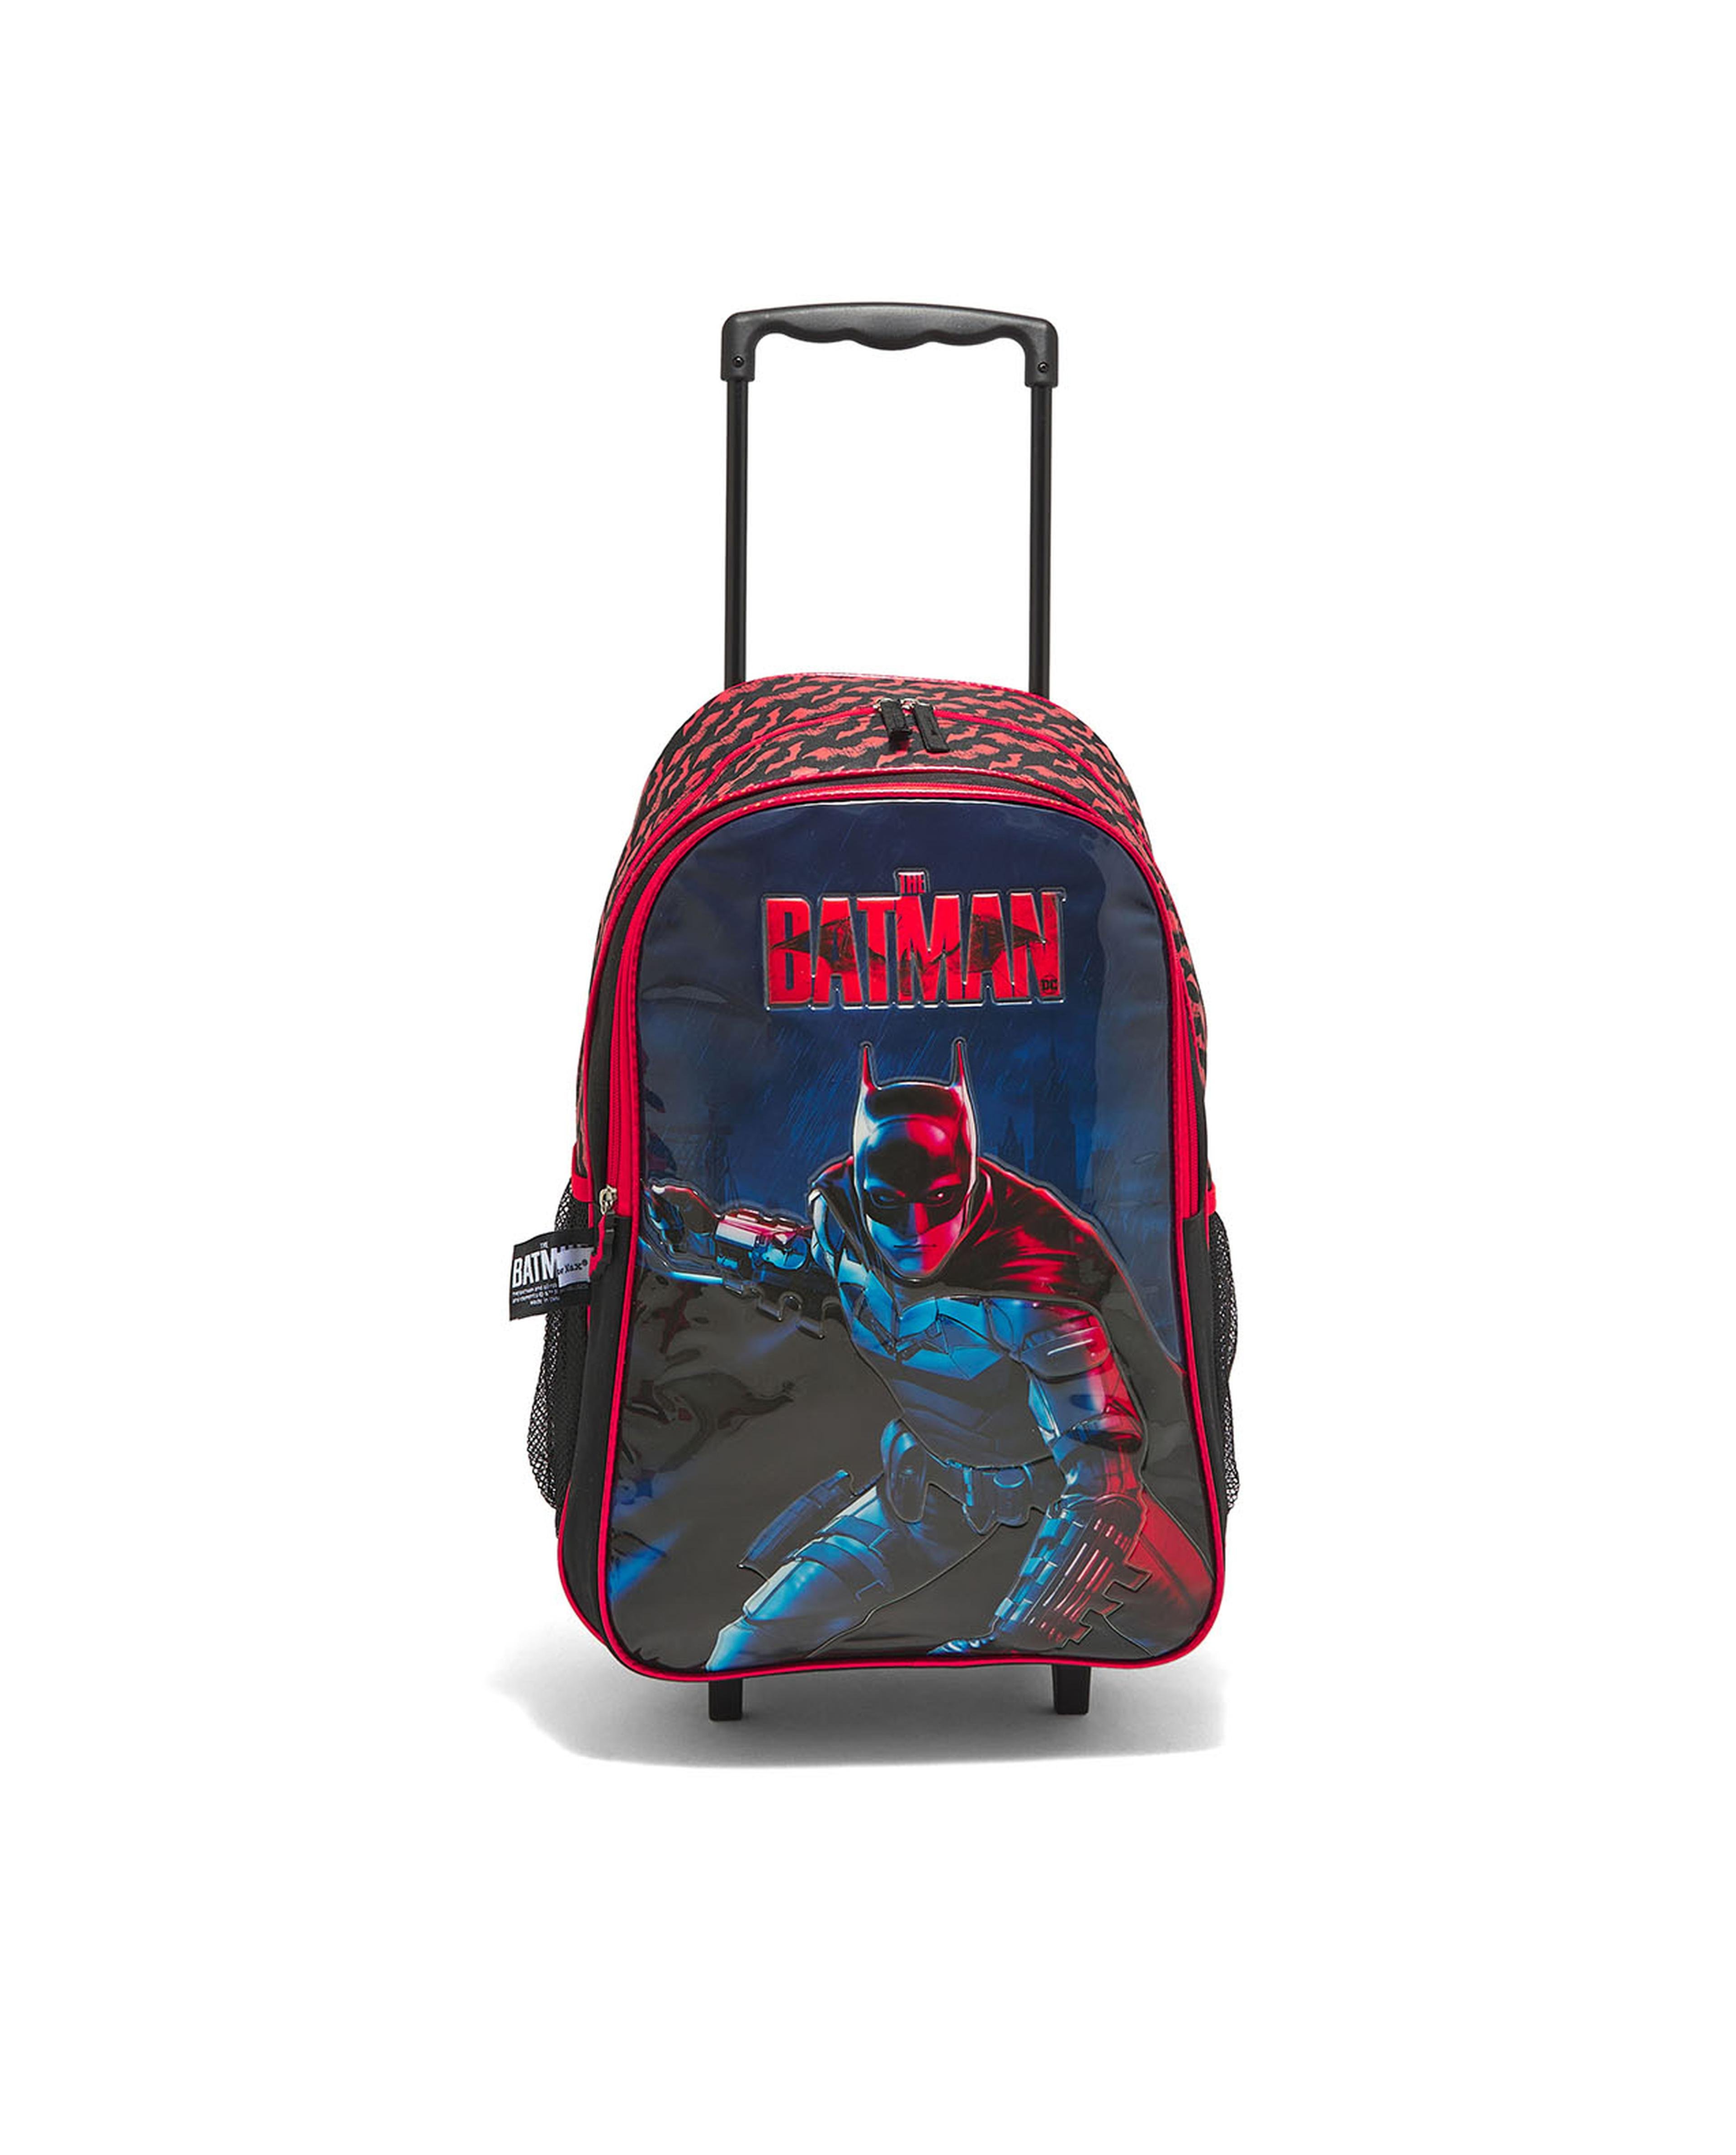 Batman Theme 5-in-1 Trolley Backpack Set - 18 inches